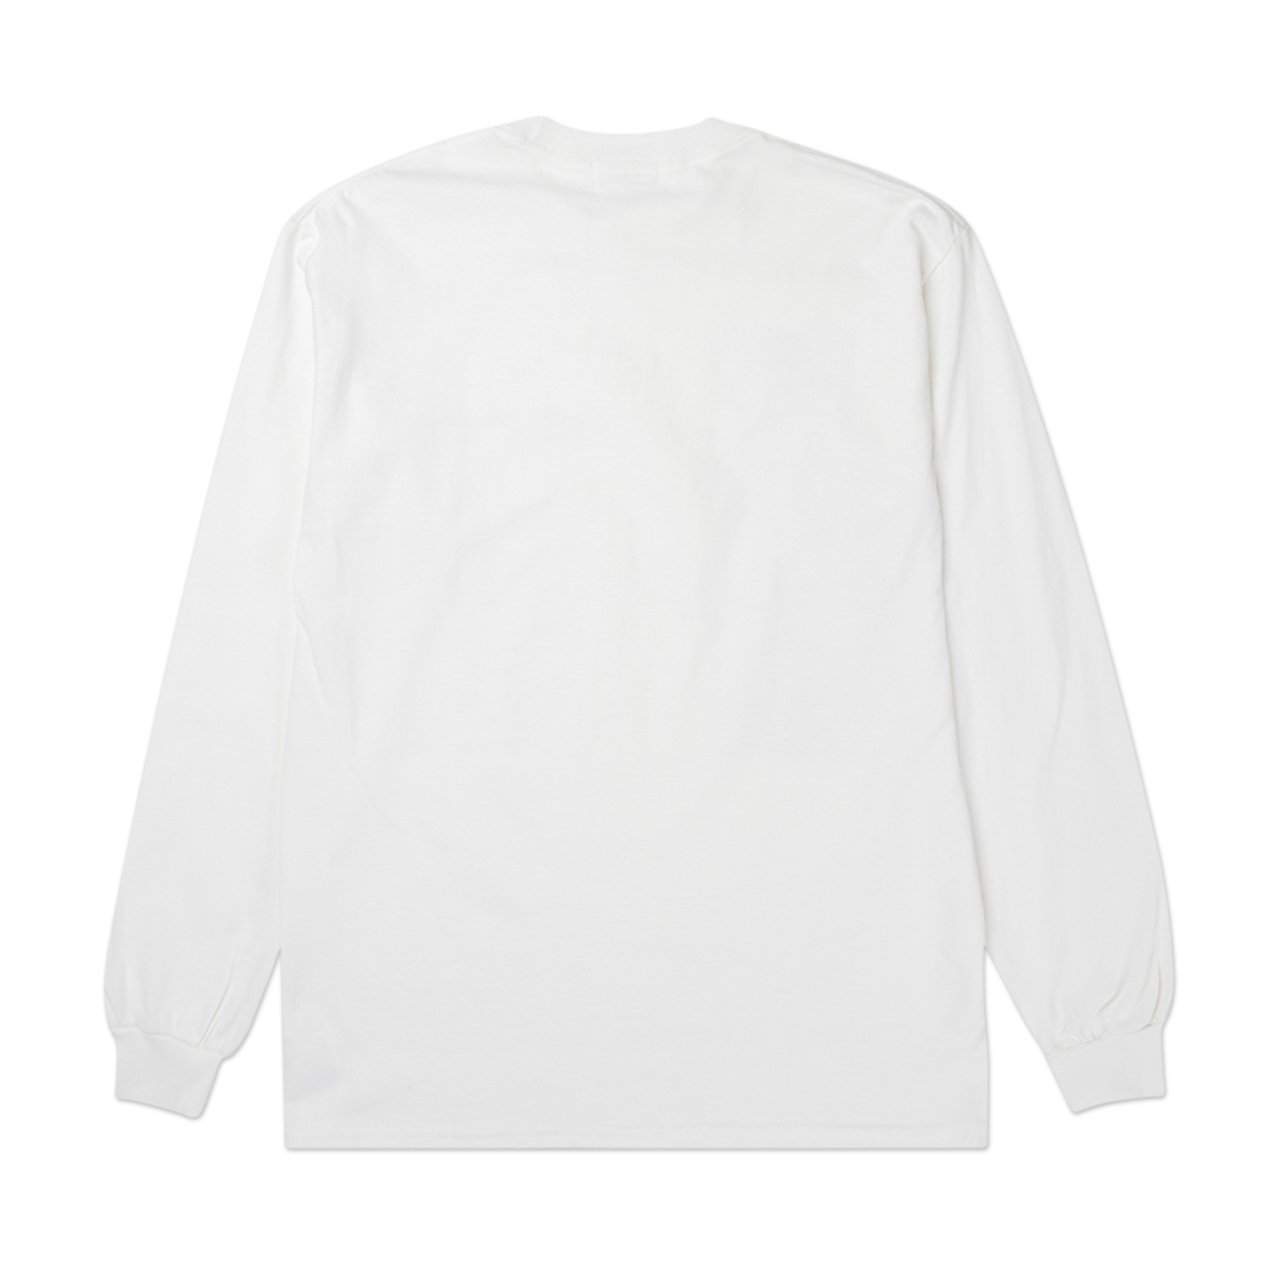 flagstuff x larry clark l/s t-shirt (white) - 19aw-fsxlc-05-wht - a.plus - Image - 2